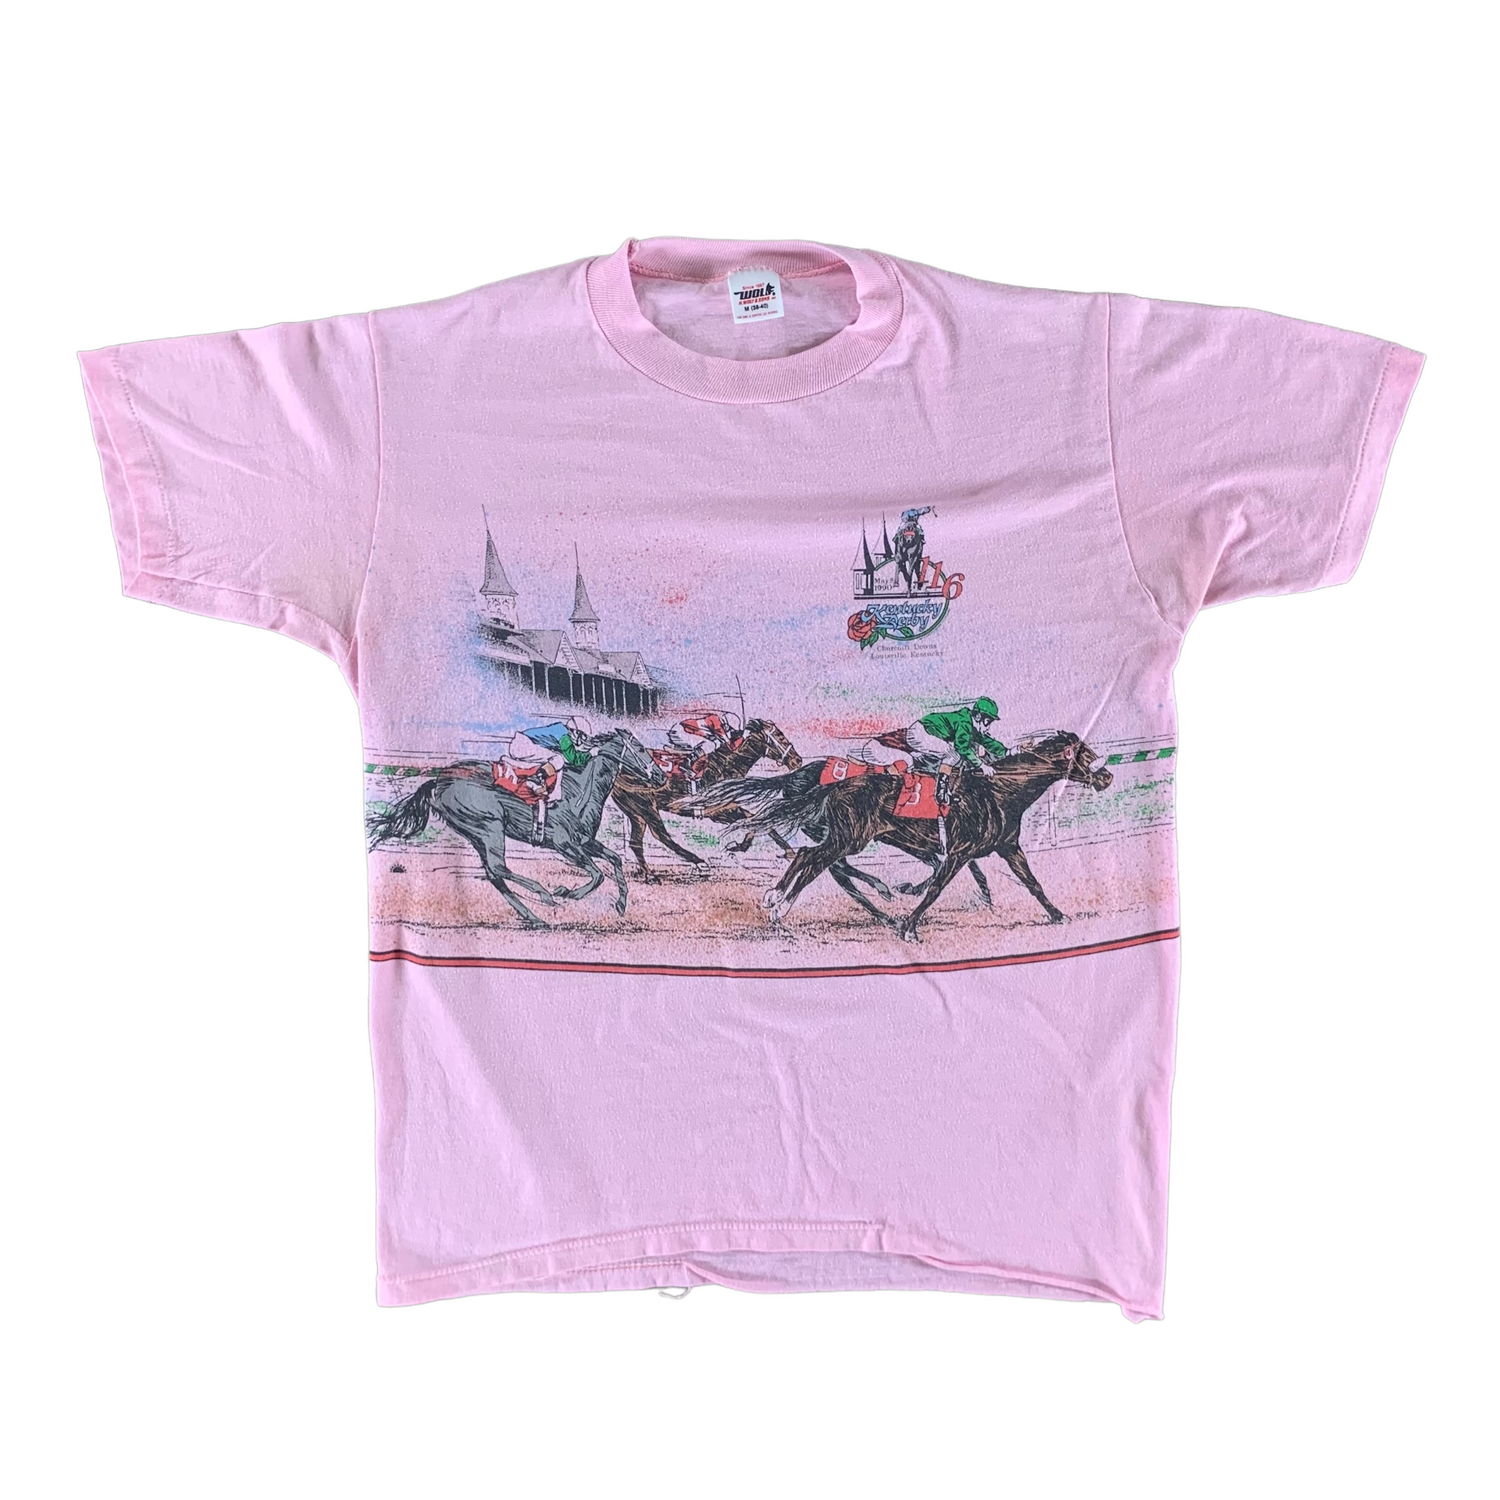 Vintage 1990s Kentucky Derby T-shirt size Medium